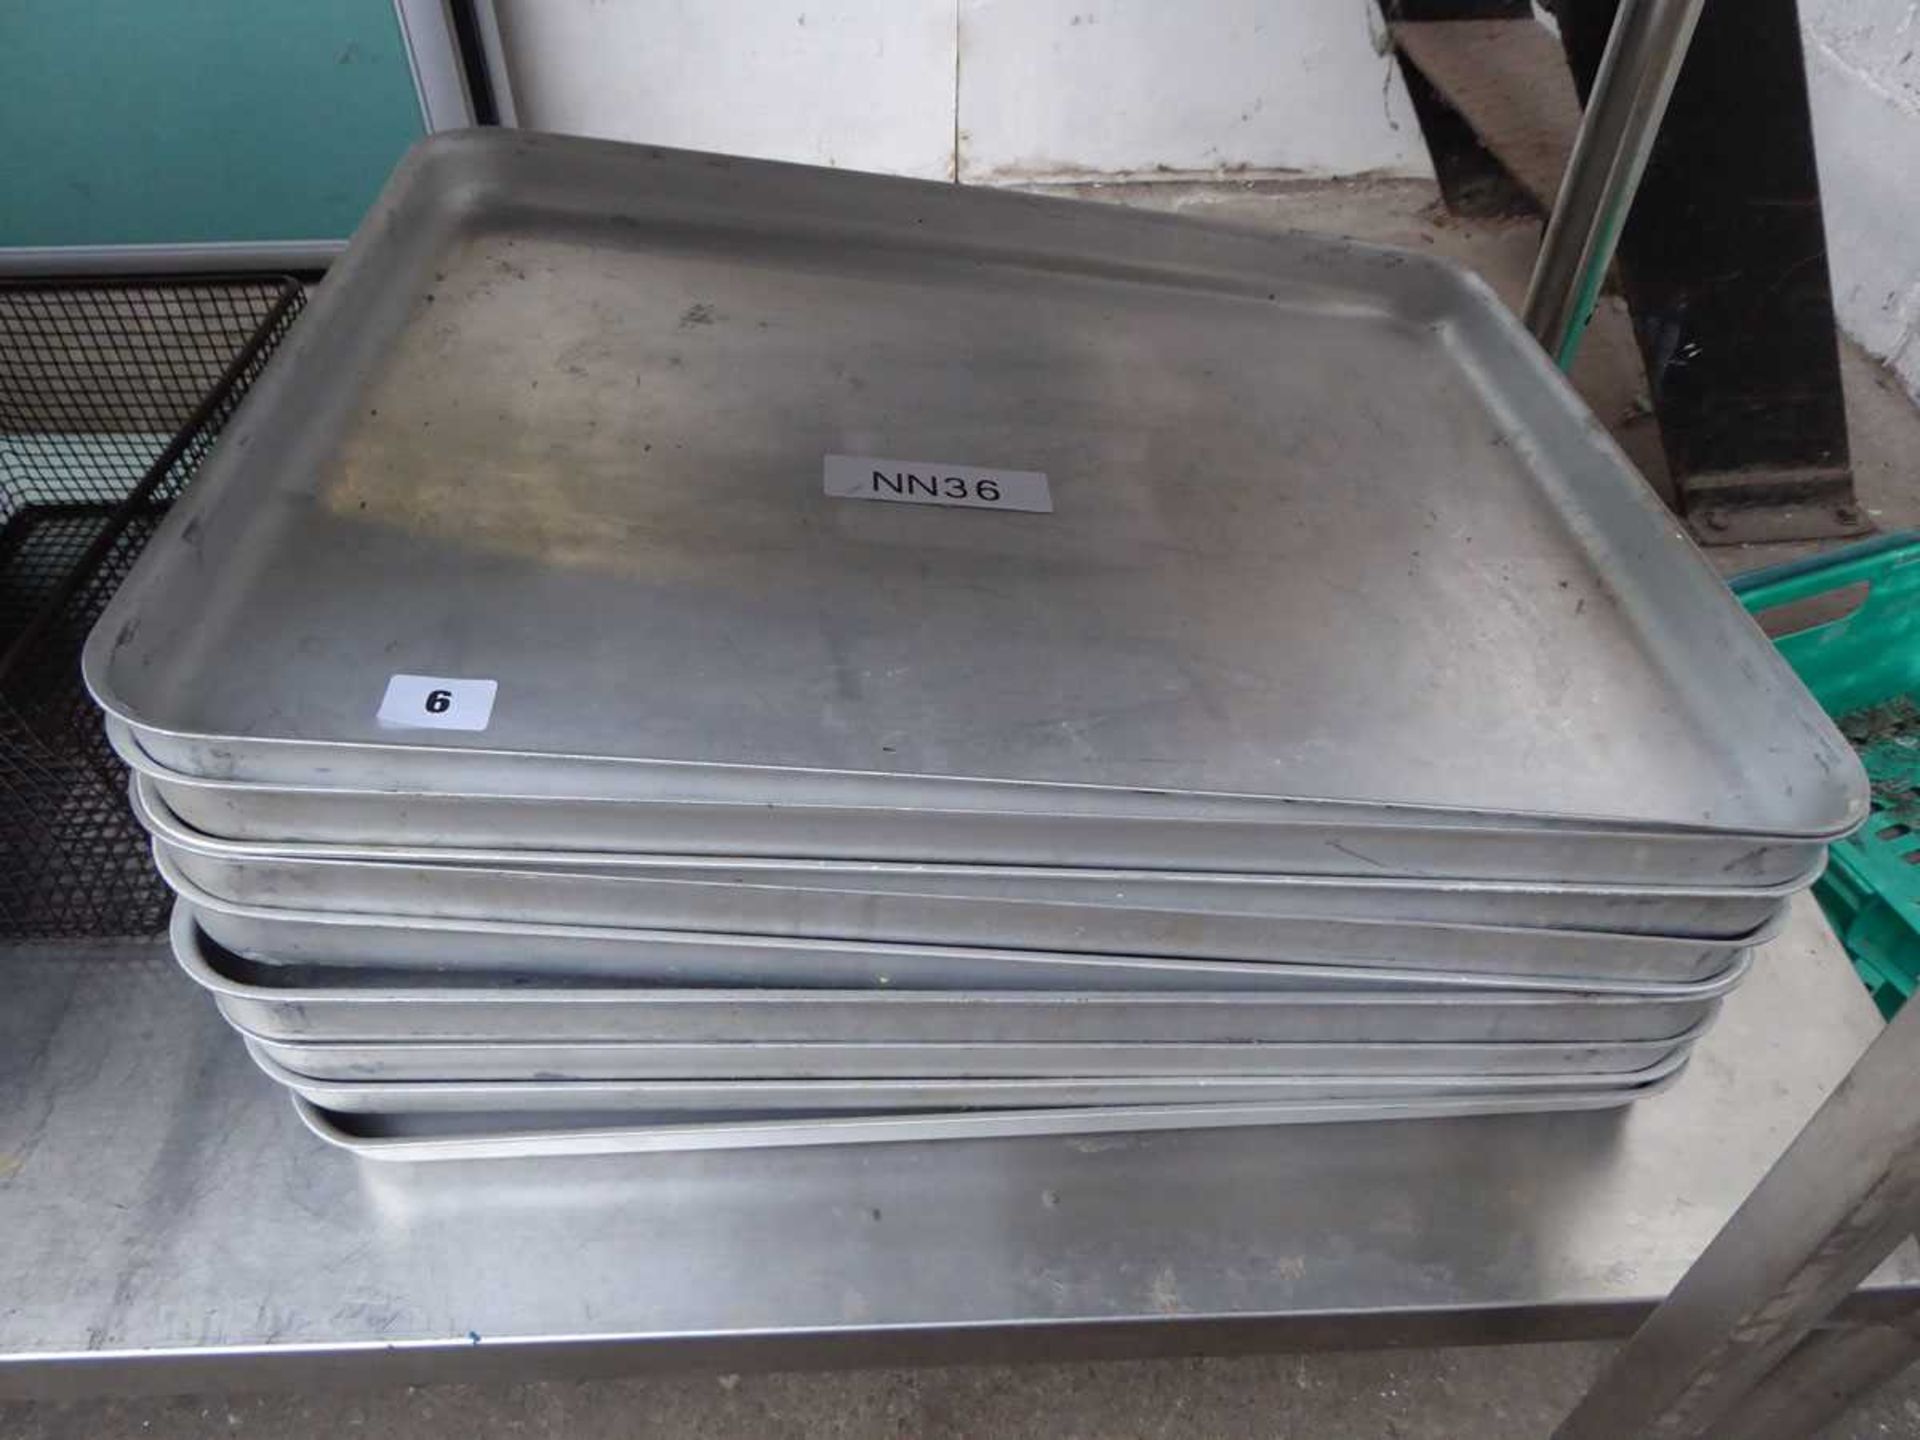 Stack of 9 large aluminium oven trays